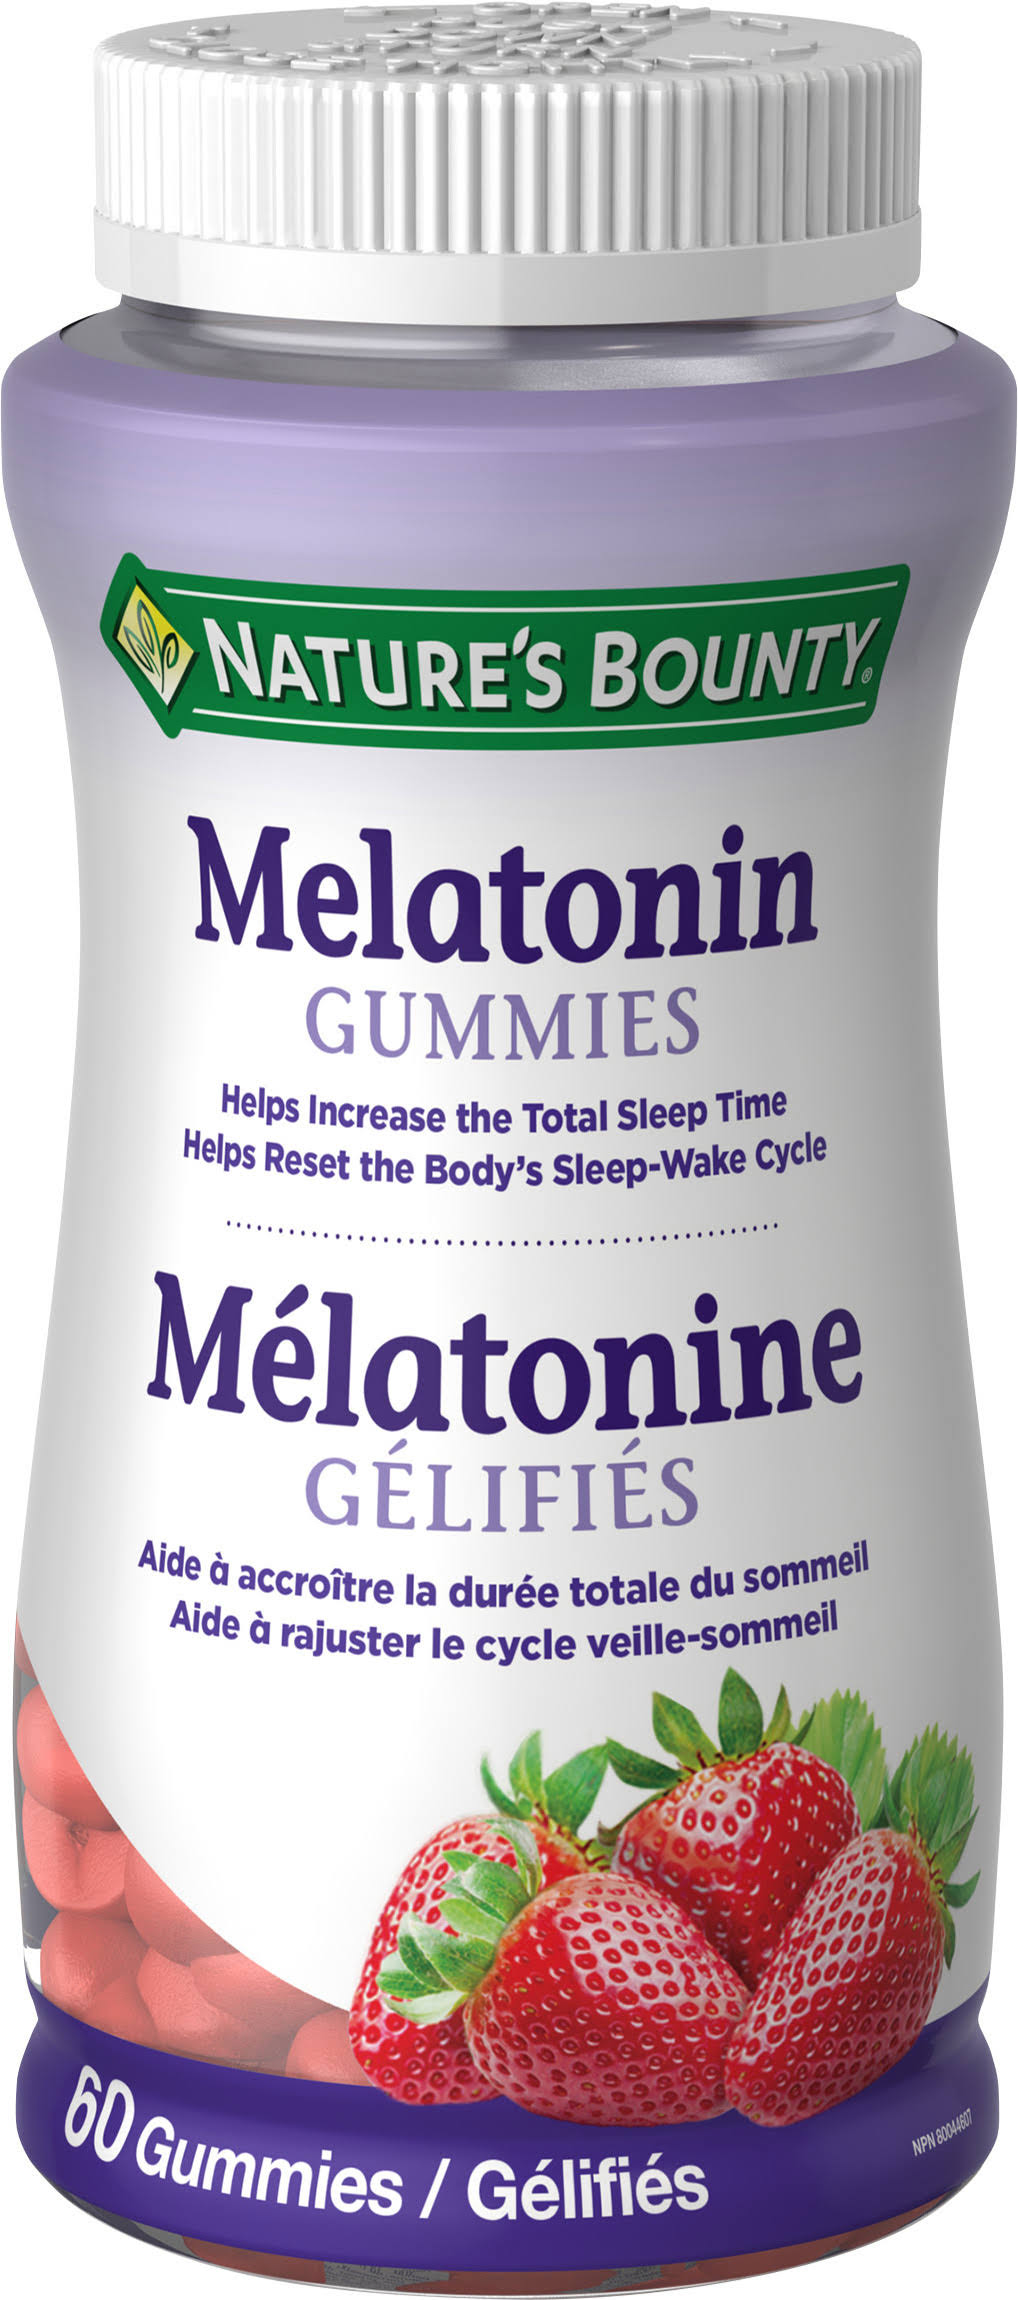 Nature's Bounty Melatonin Gummies, 60 Gummies